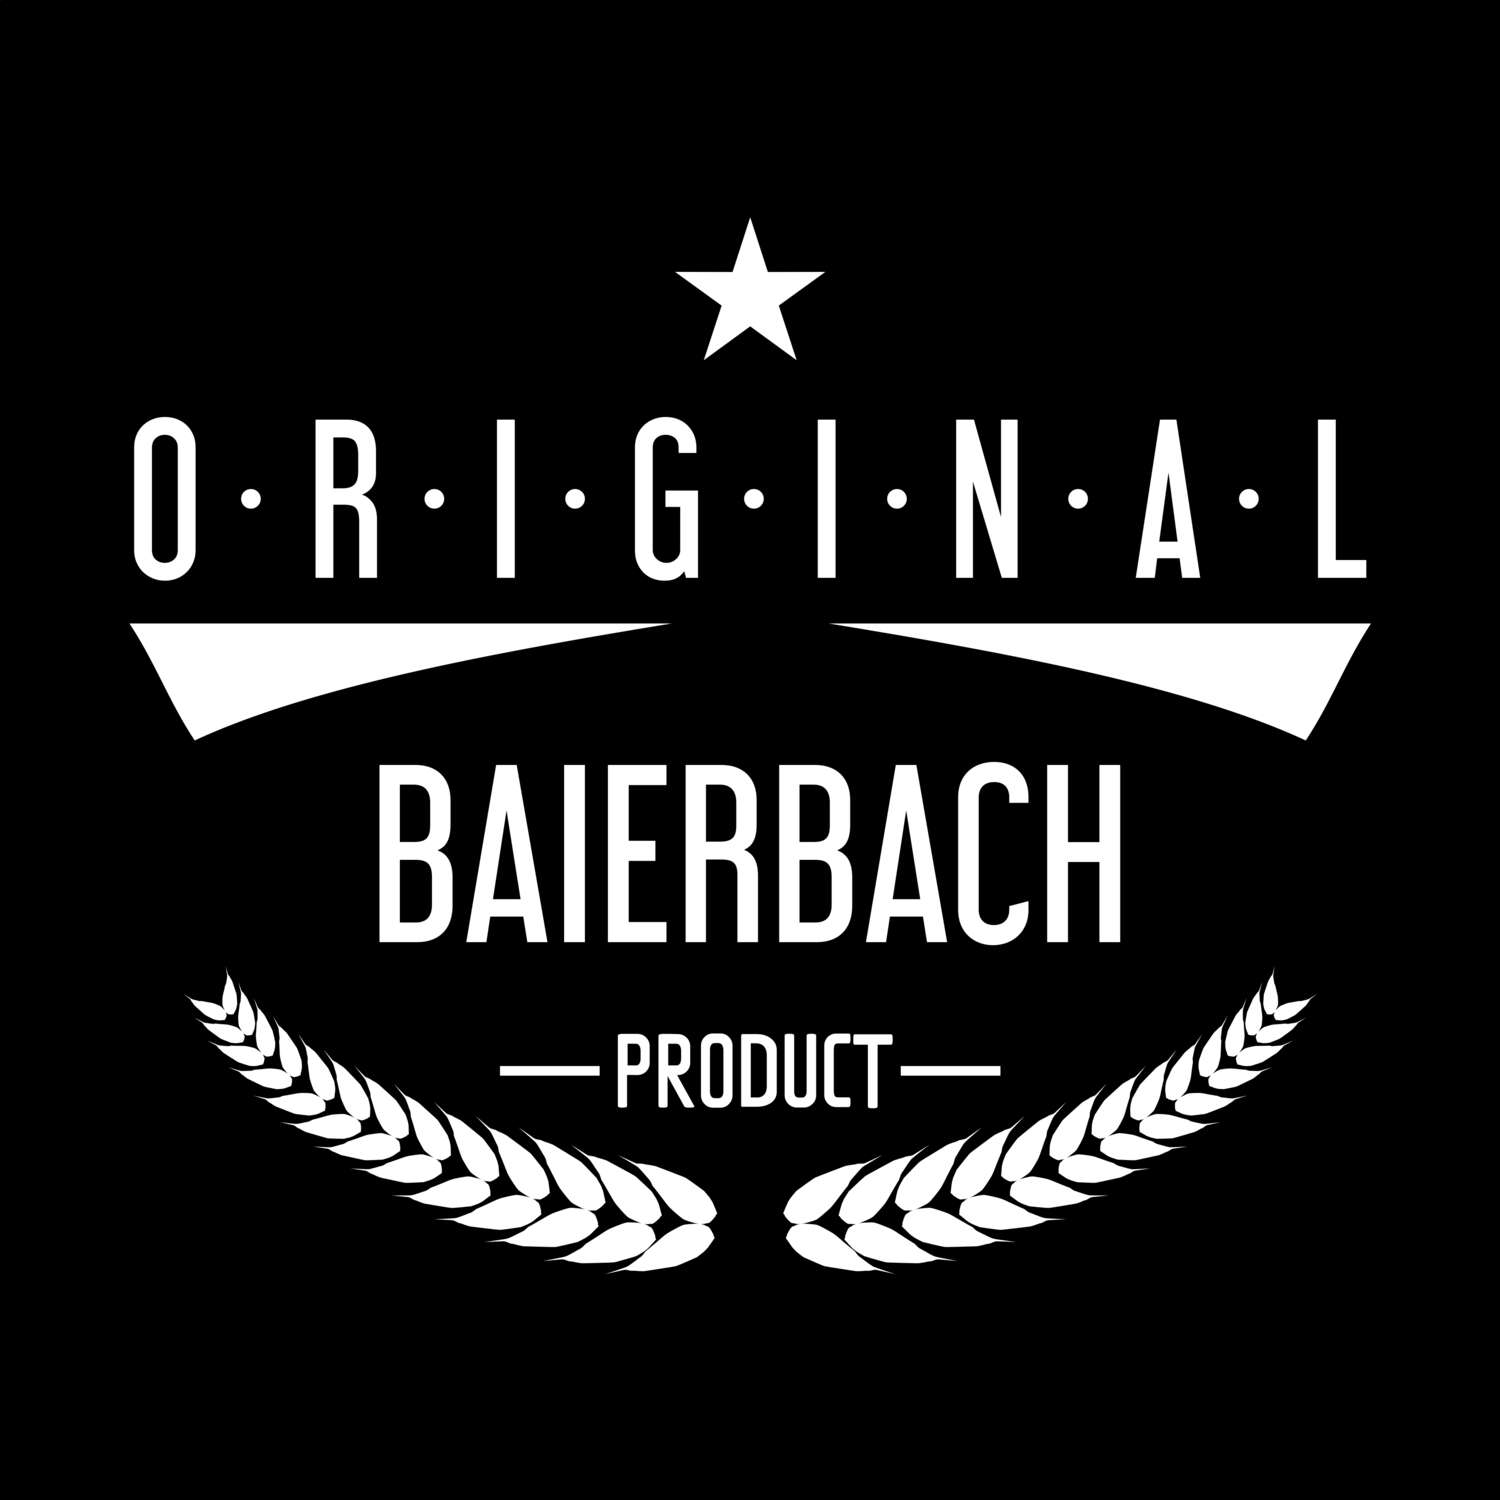 Baierbach T-Shirt »Original Product«